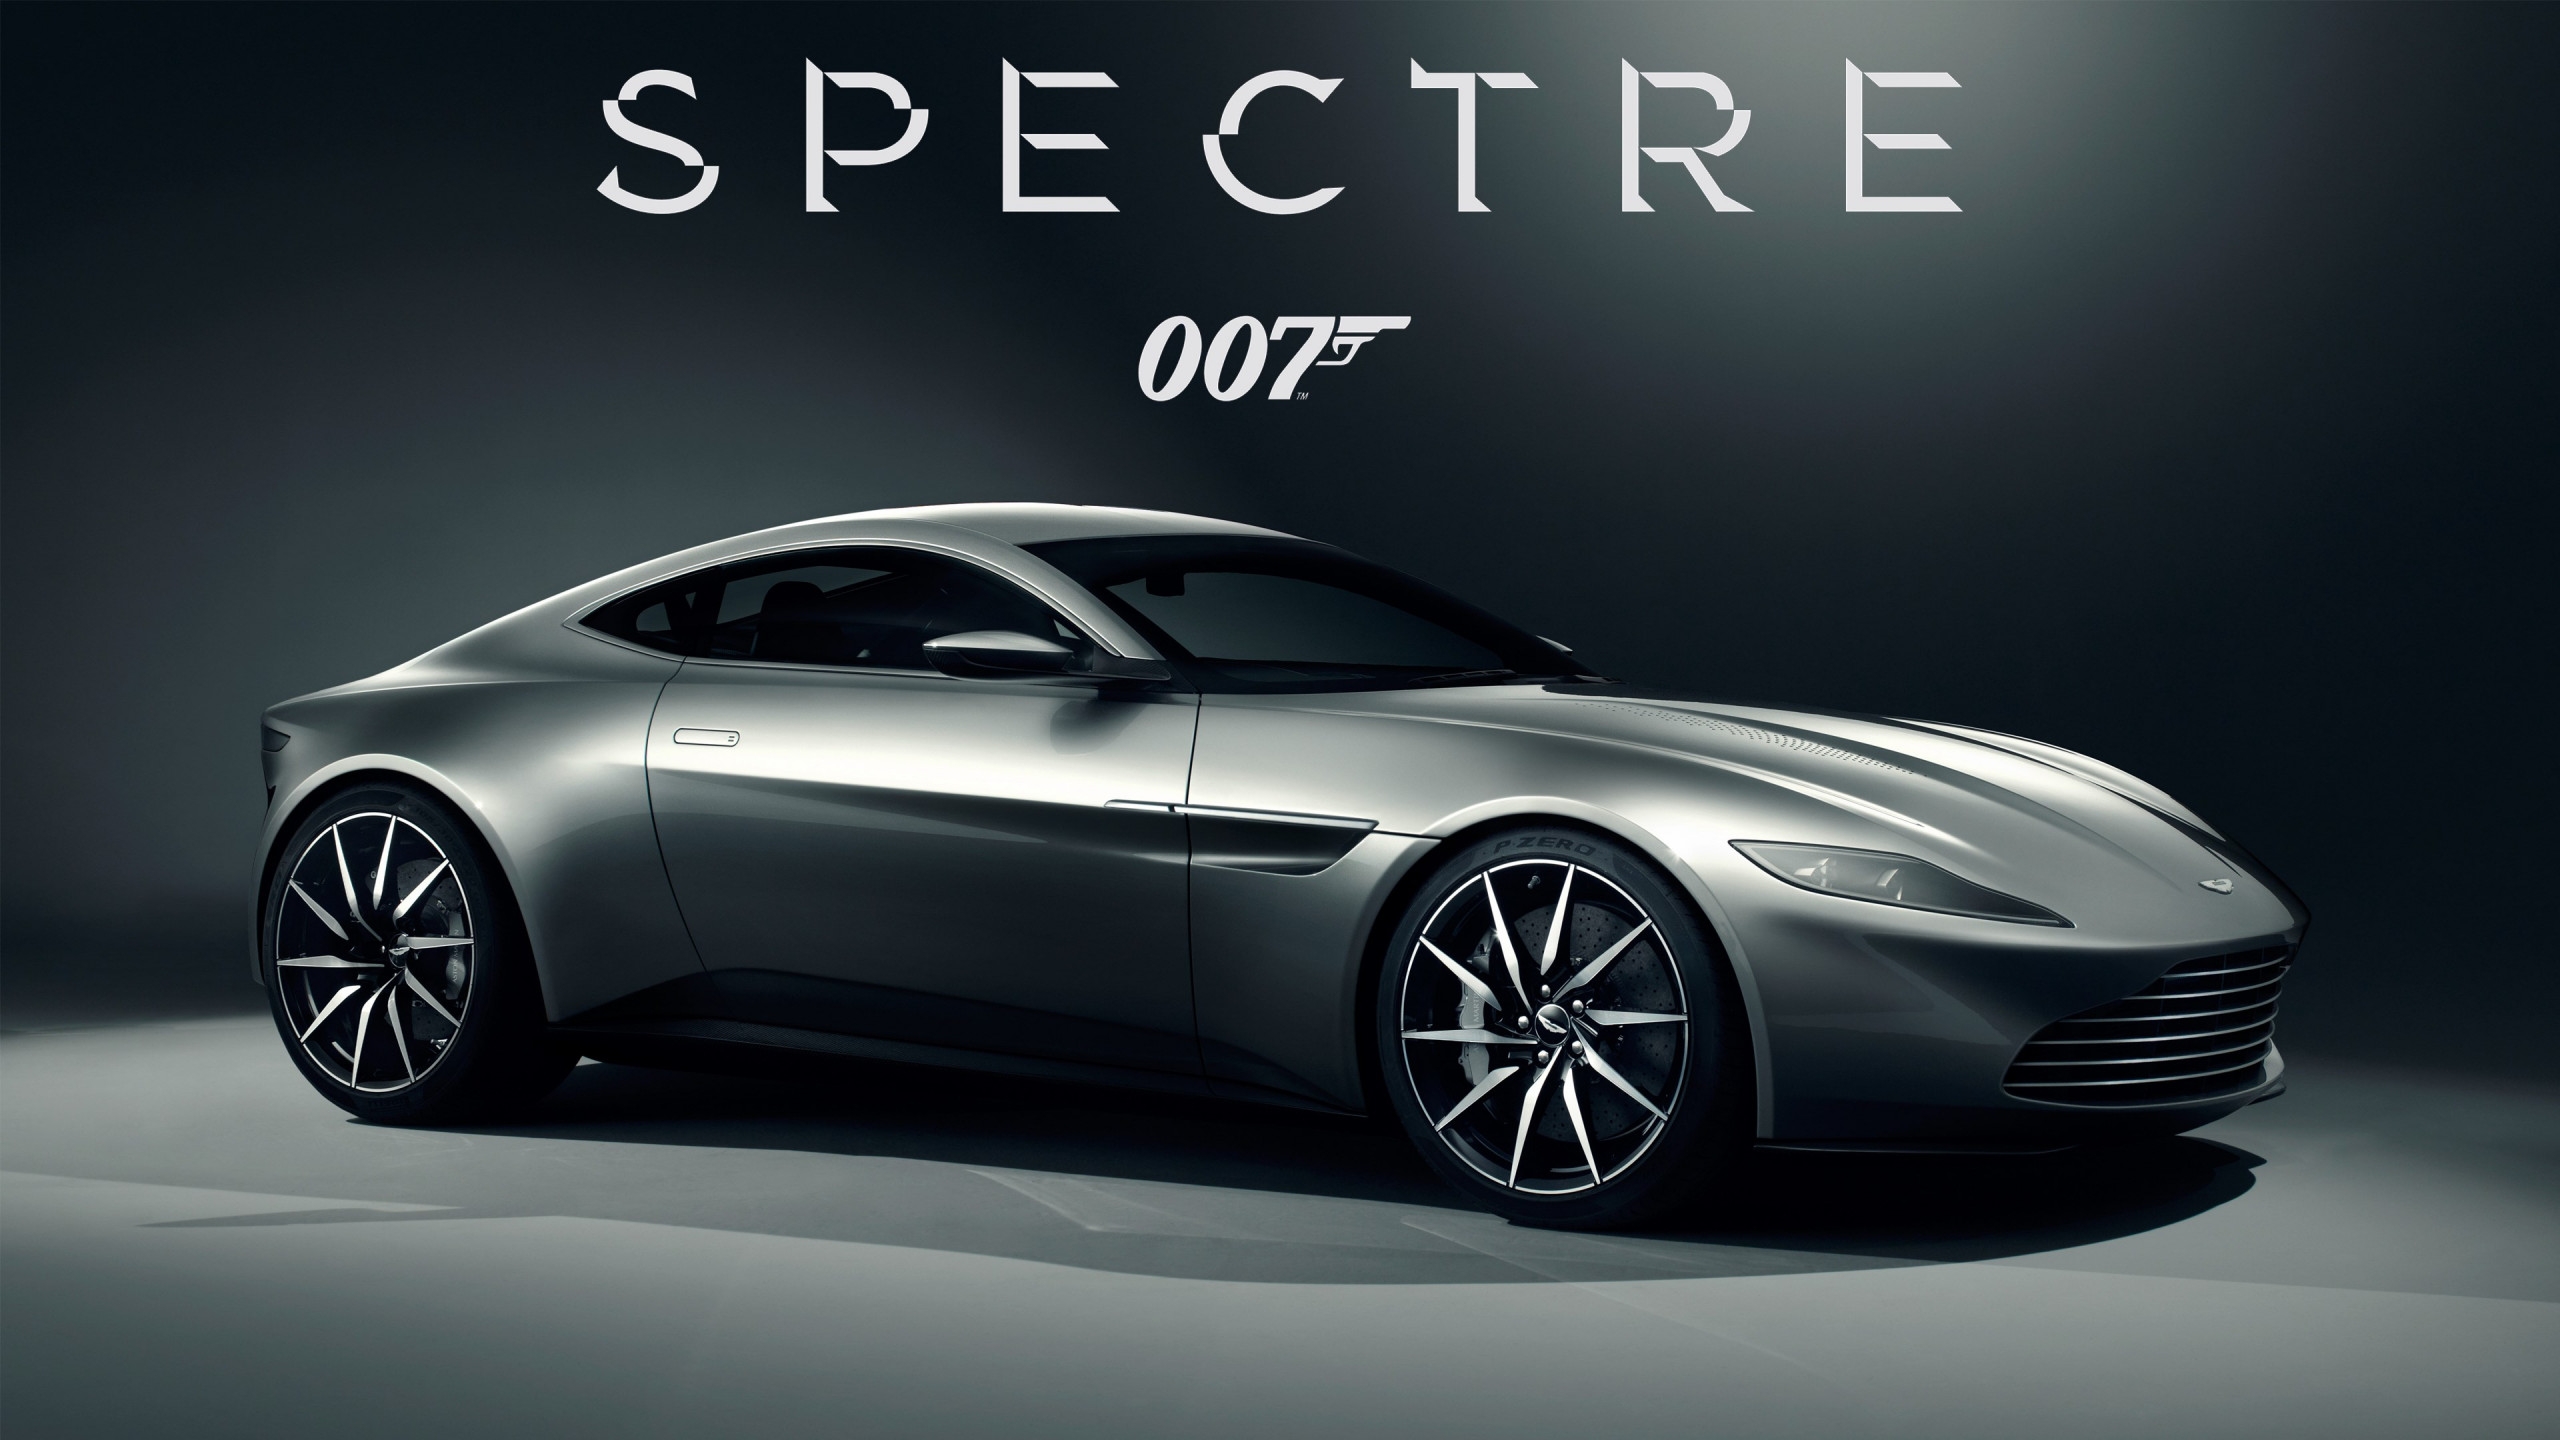 Aston Martin DB10 007 Spectre car wallpaper 2560x1440